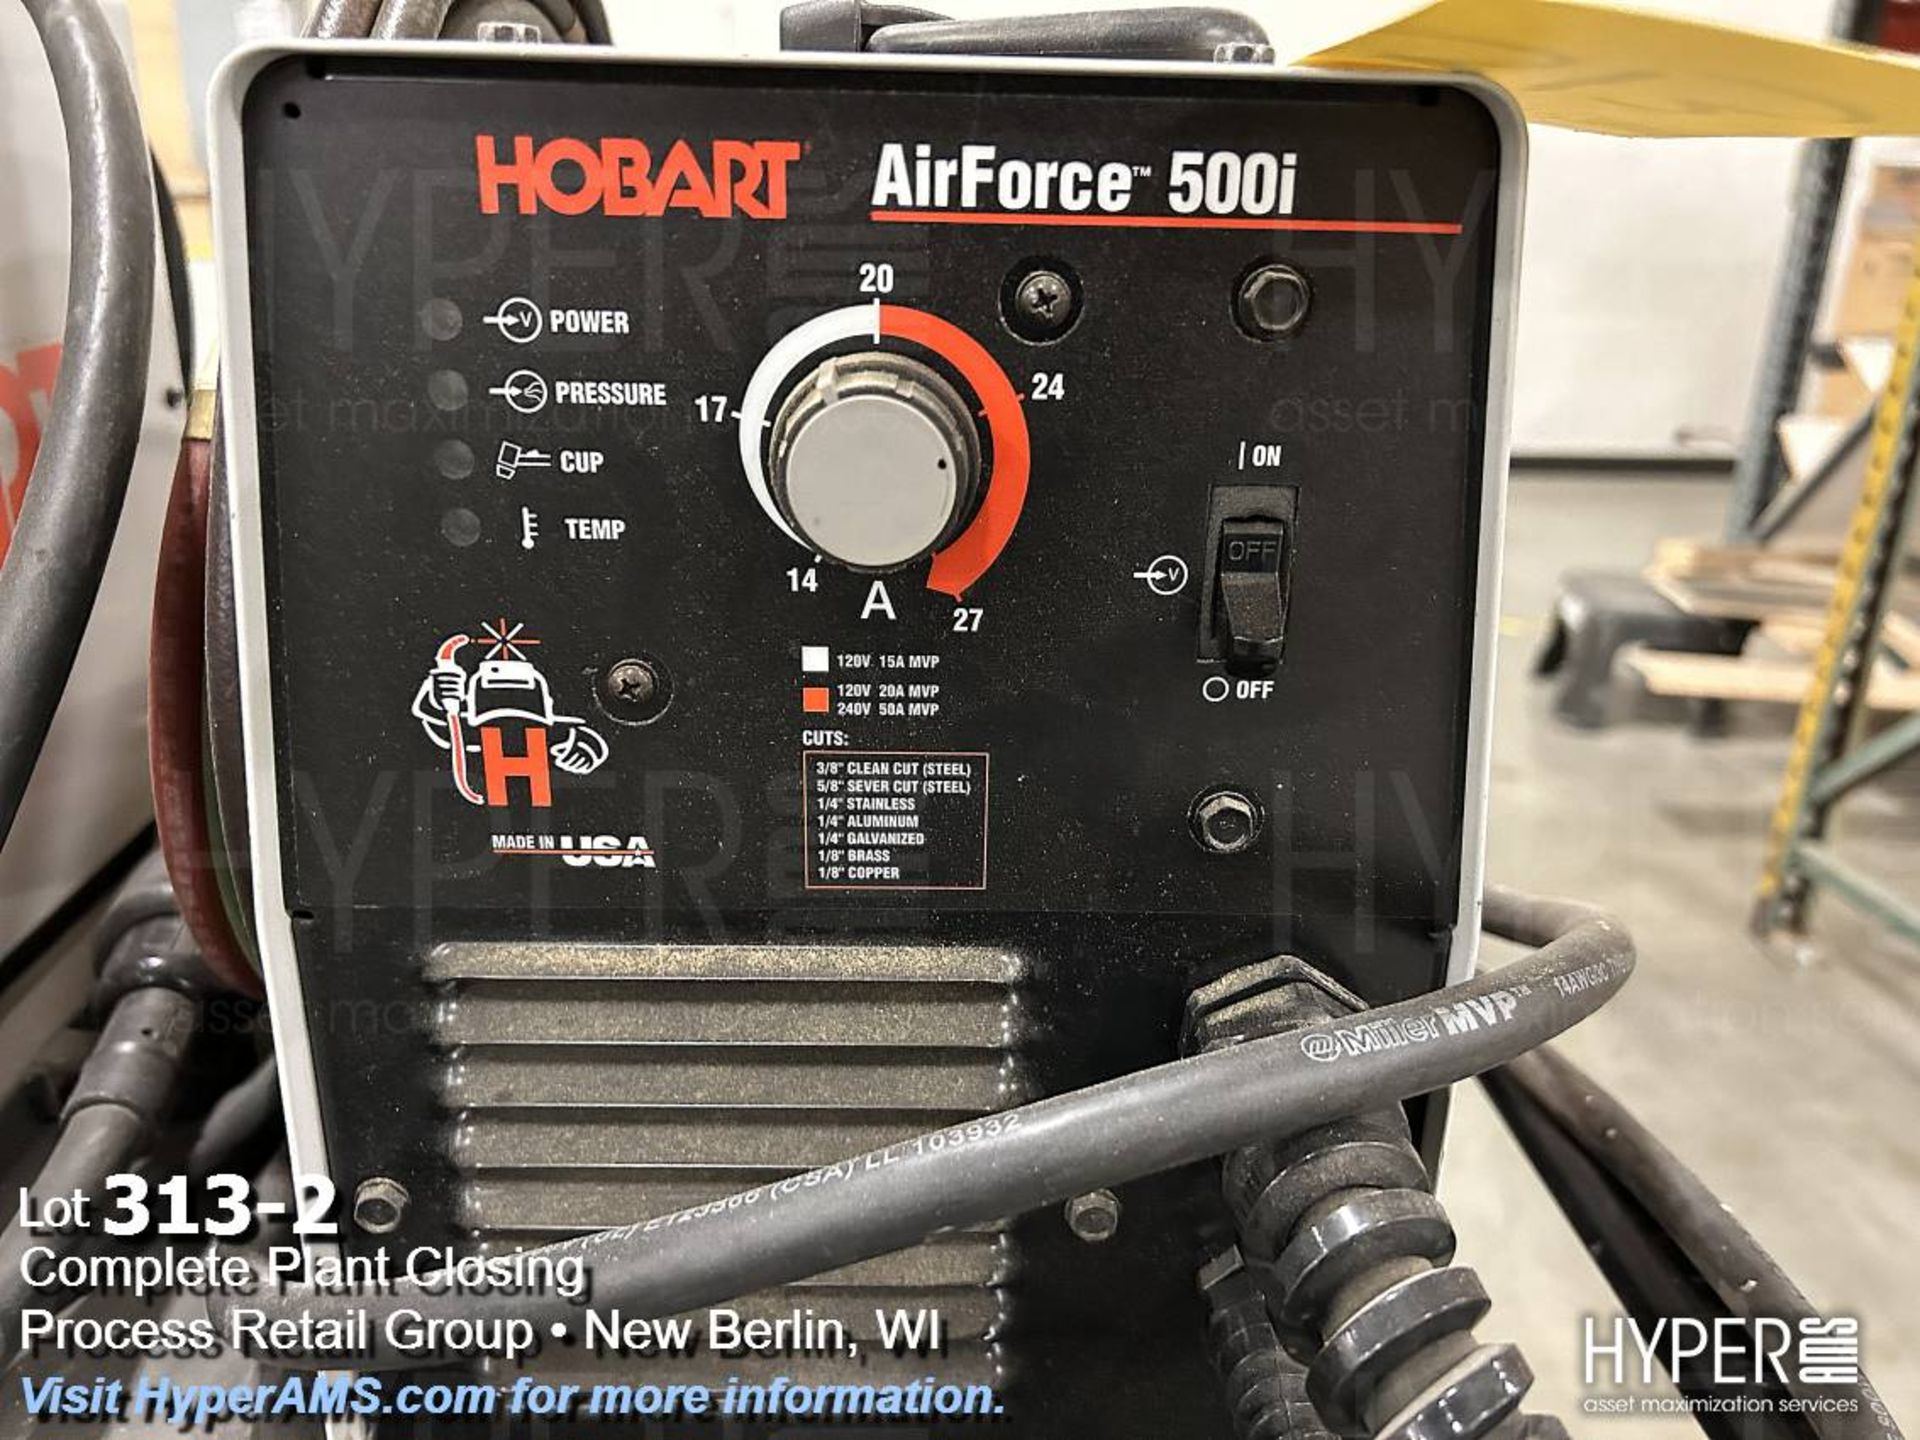 Hobart Air Force 500i plasma cutter - Image 2 of 5